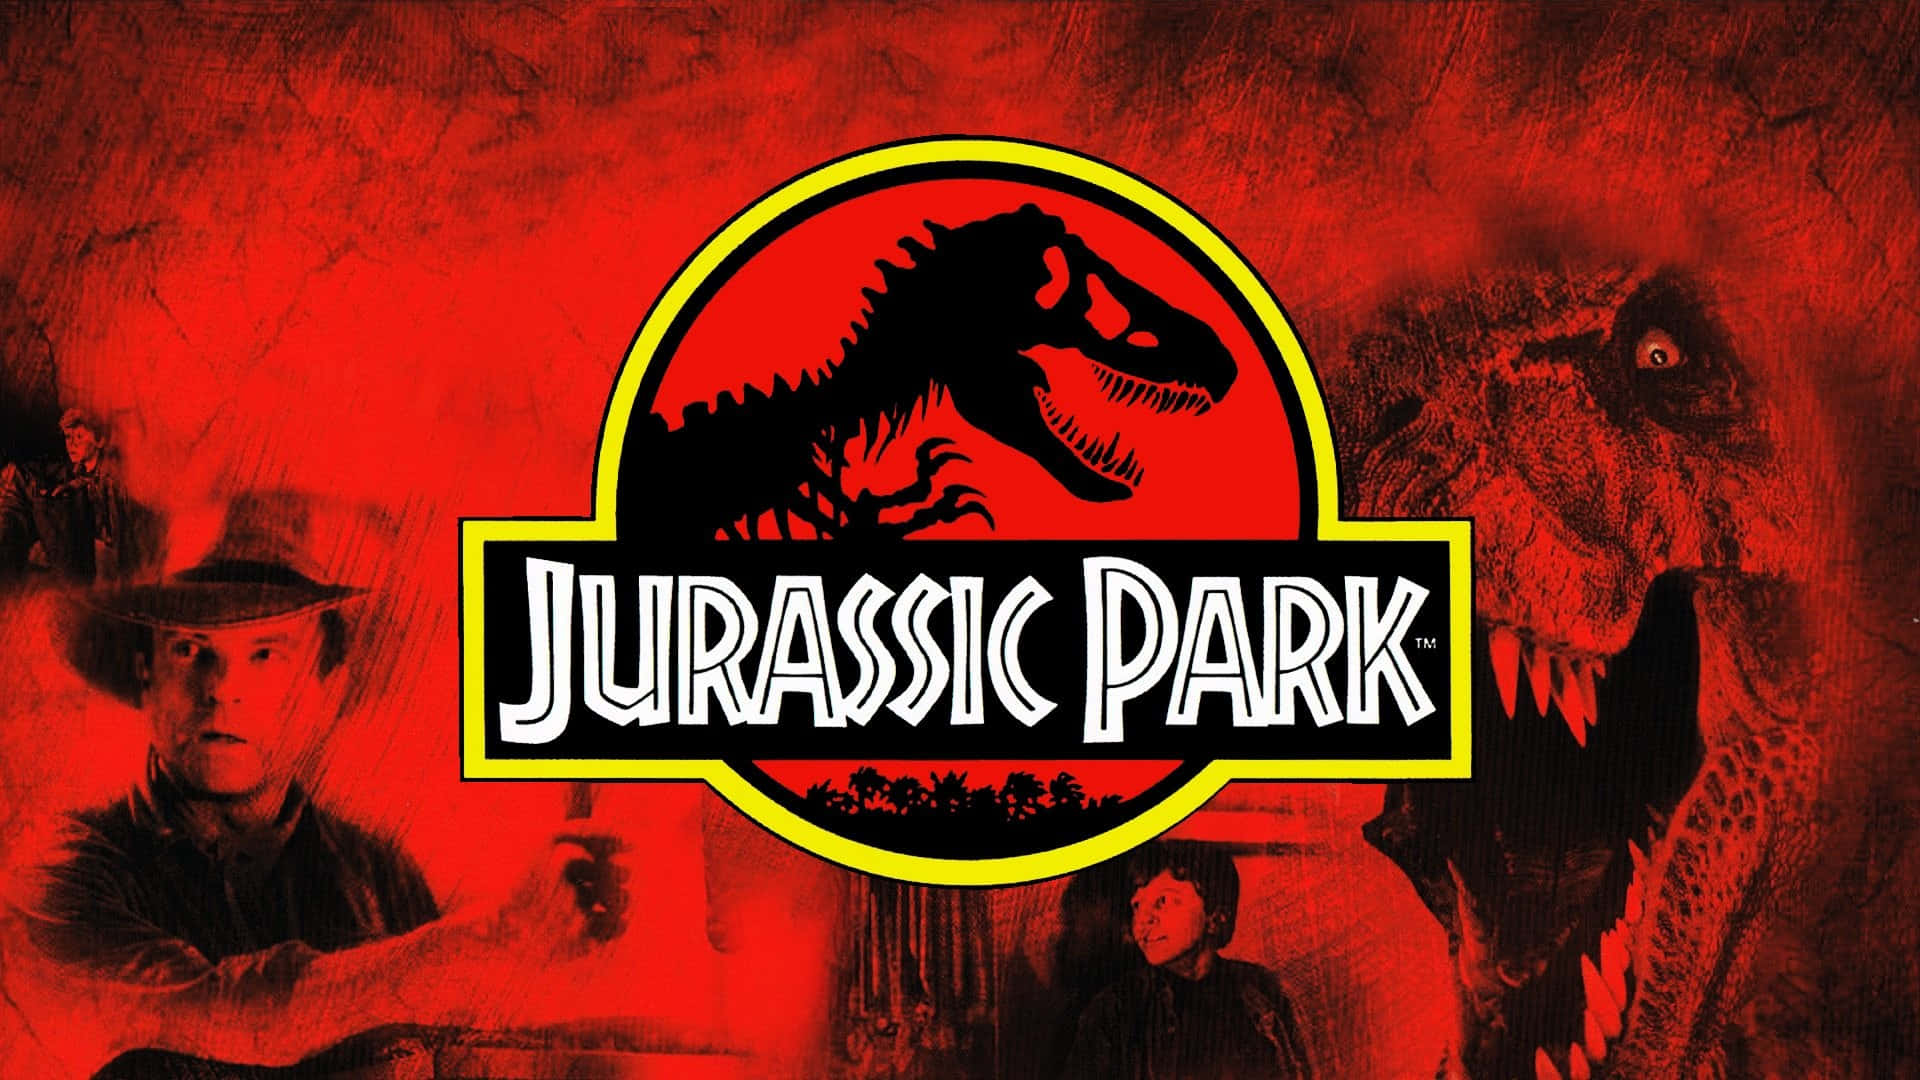 Jurassic Park Zoom -Take A Virtual Journey Through Prehistoric Times